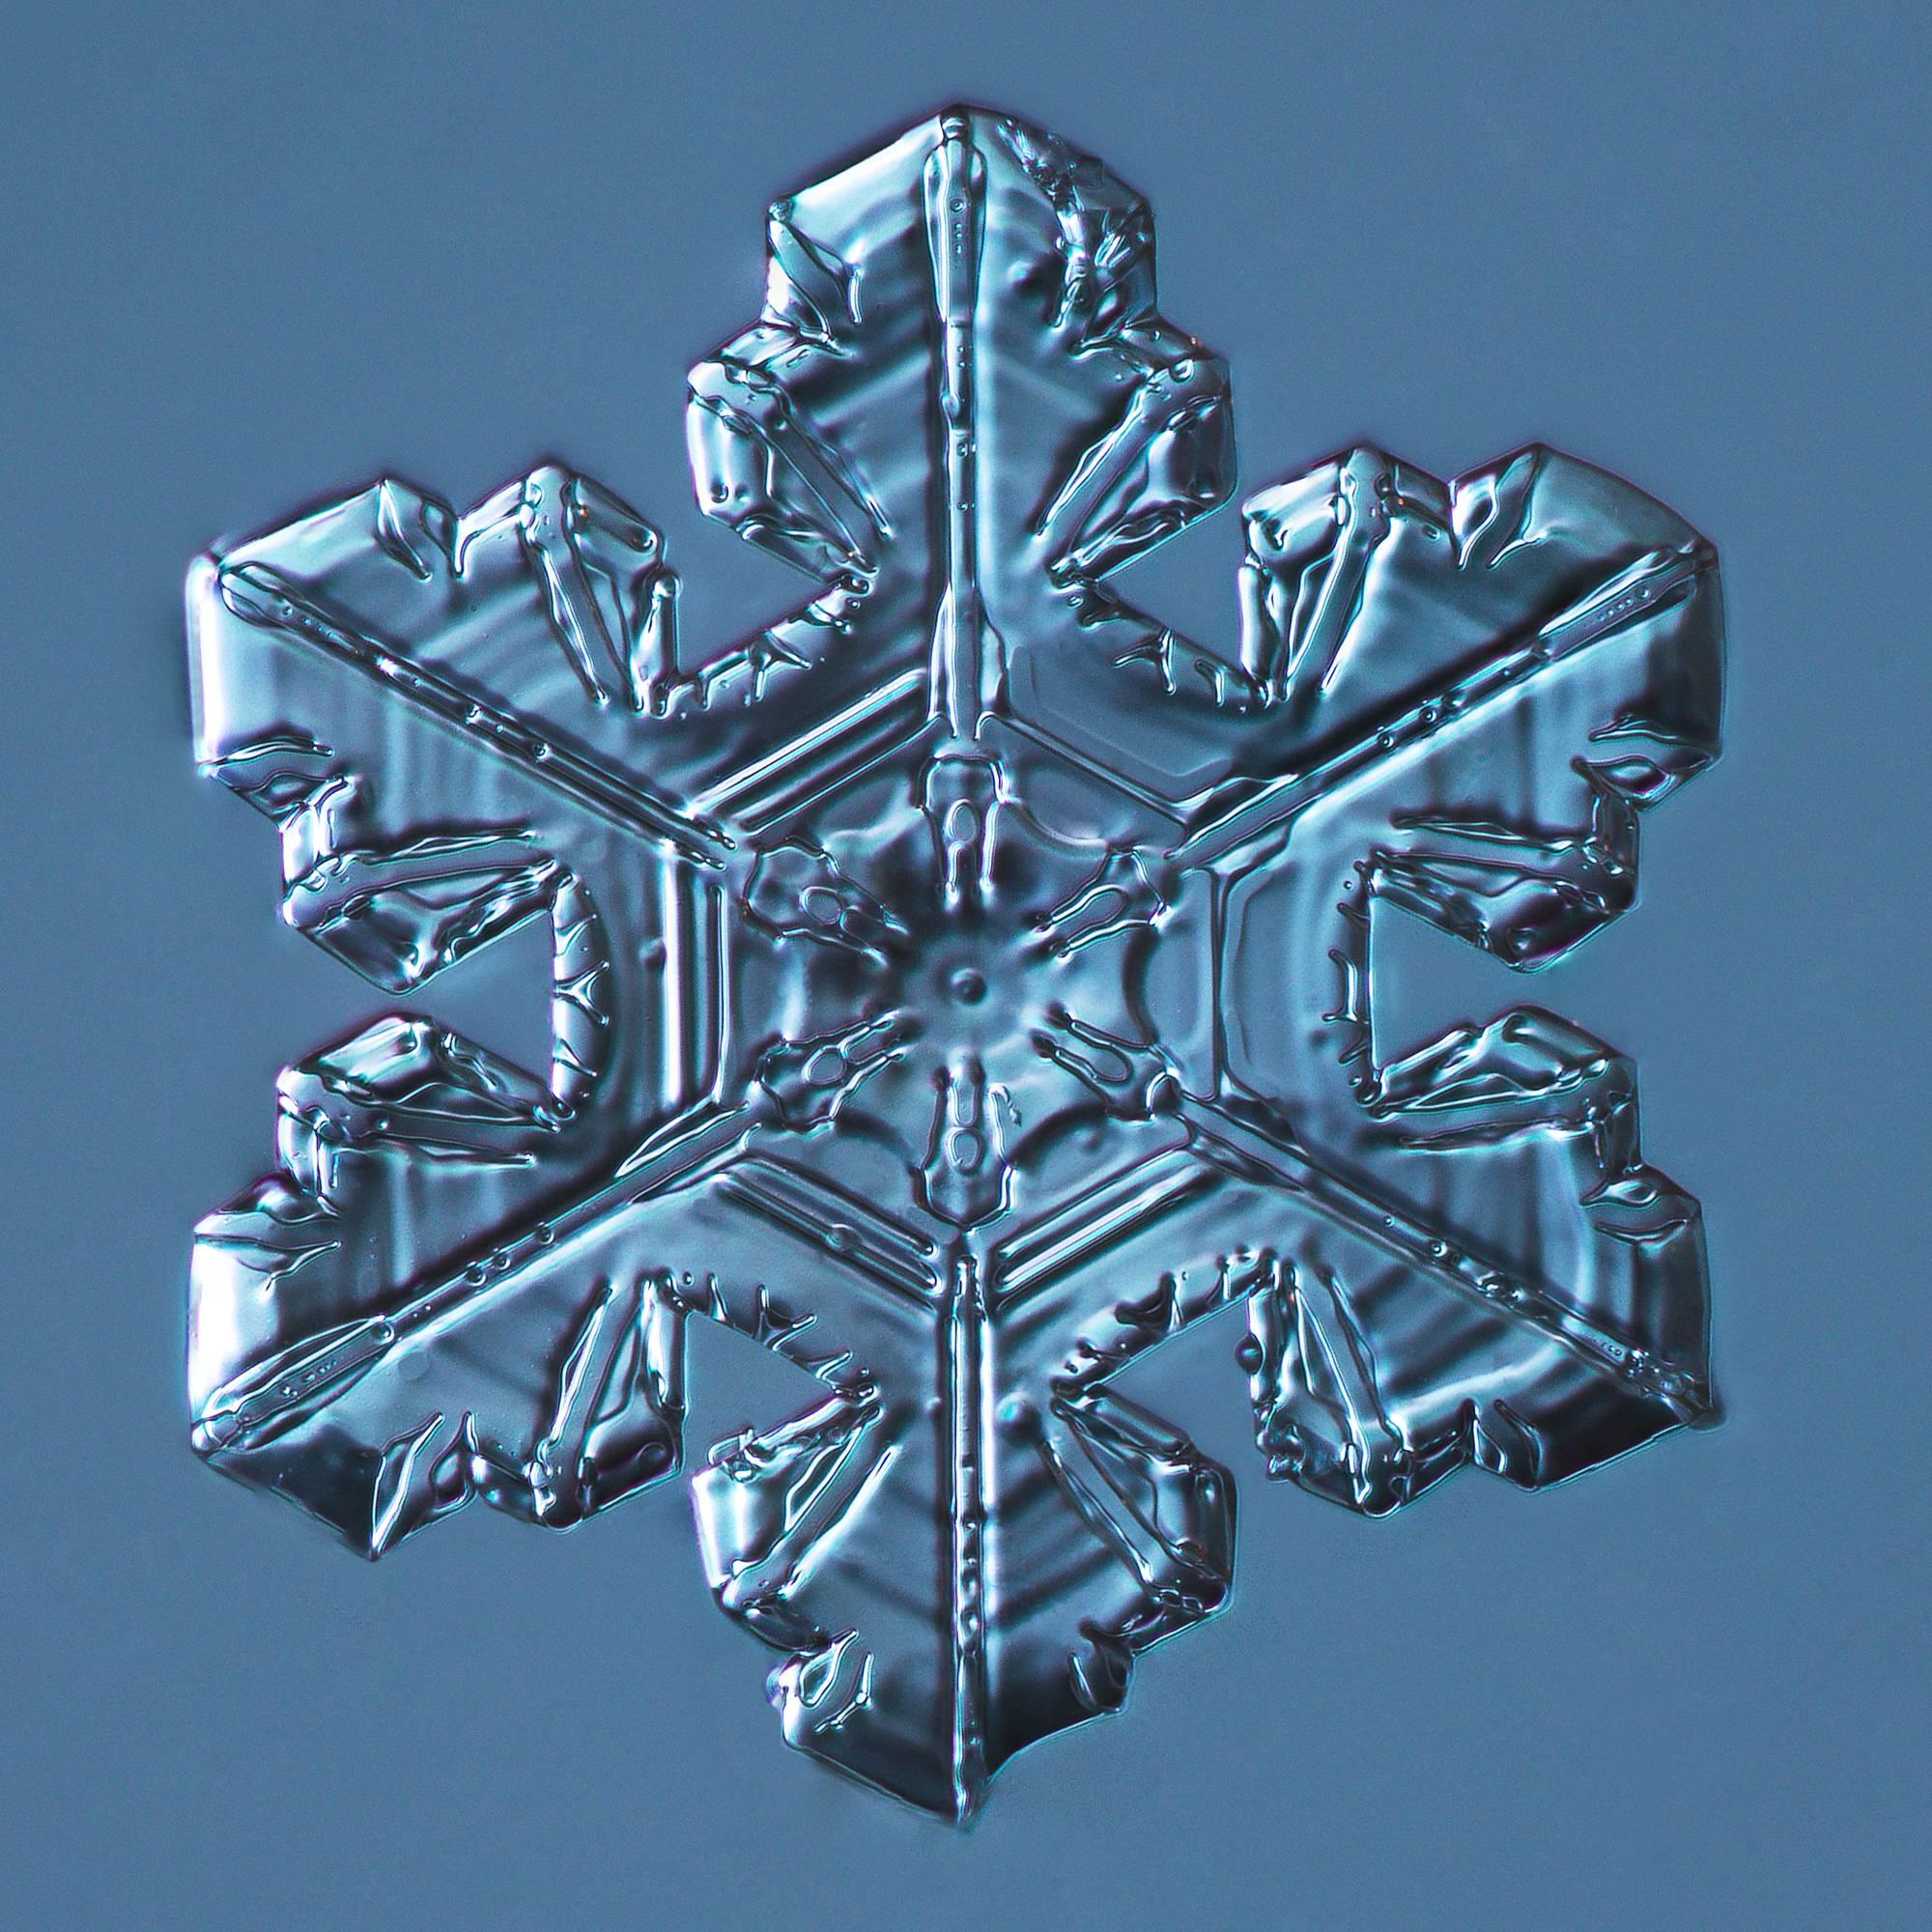 Snowflake 2014.03.23.005 - Photograph by Douglas Levere